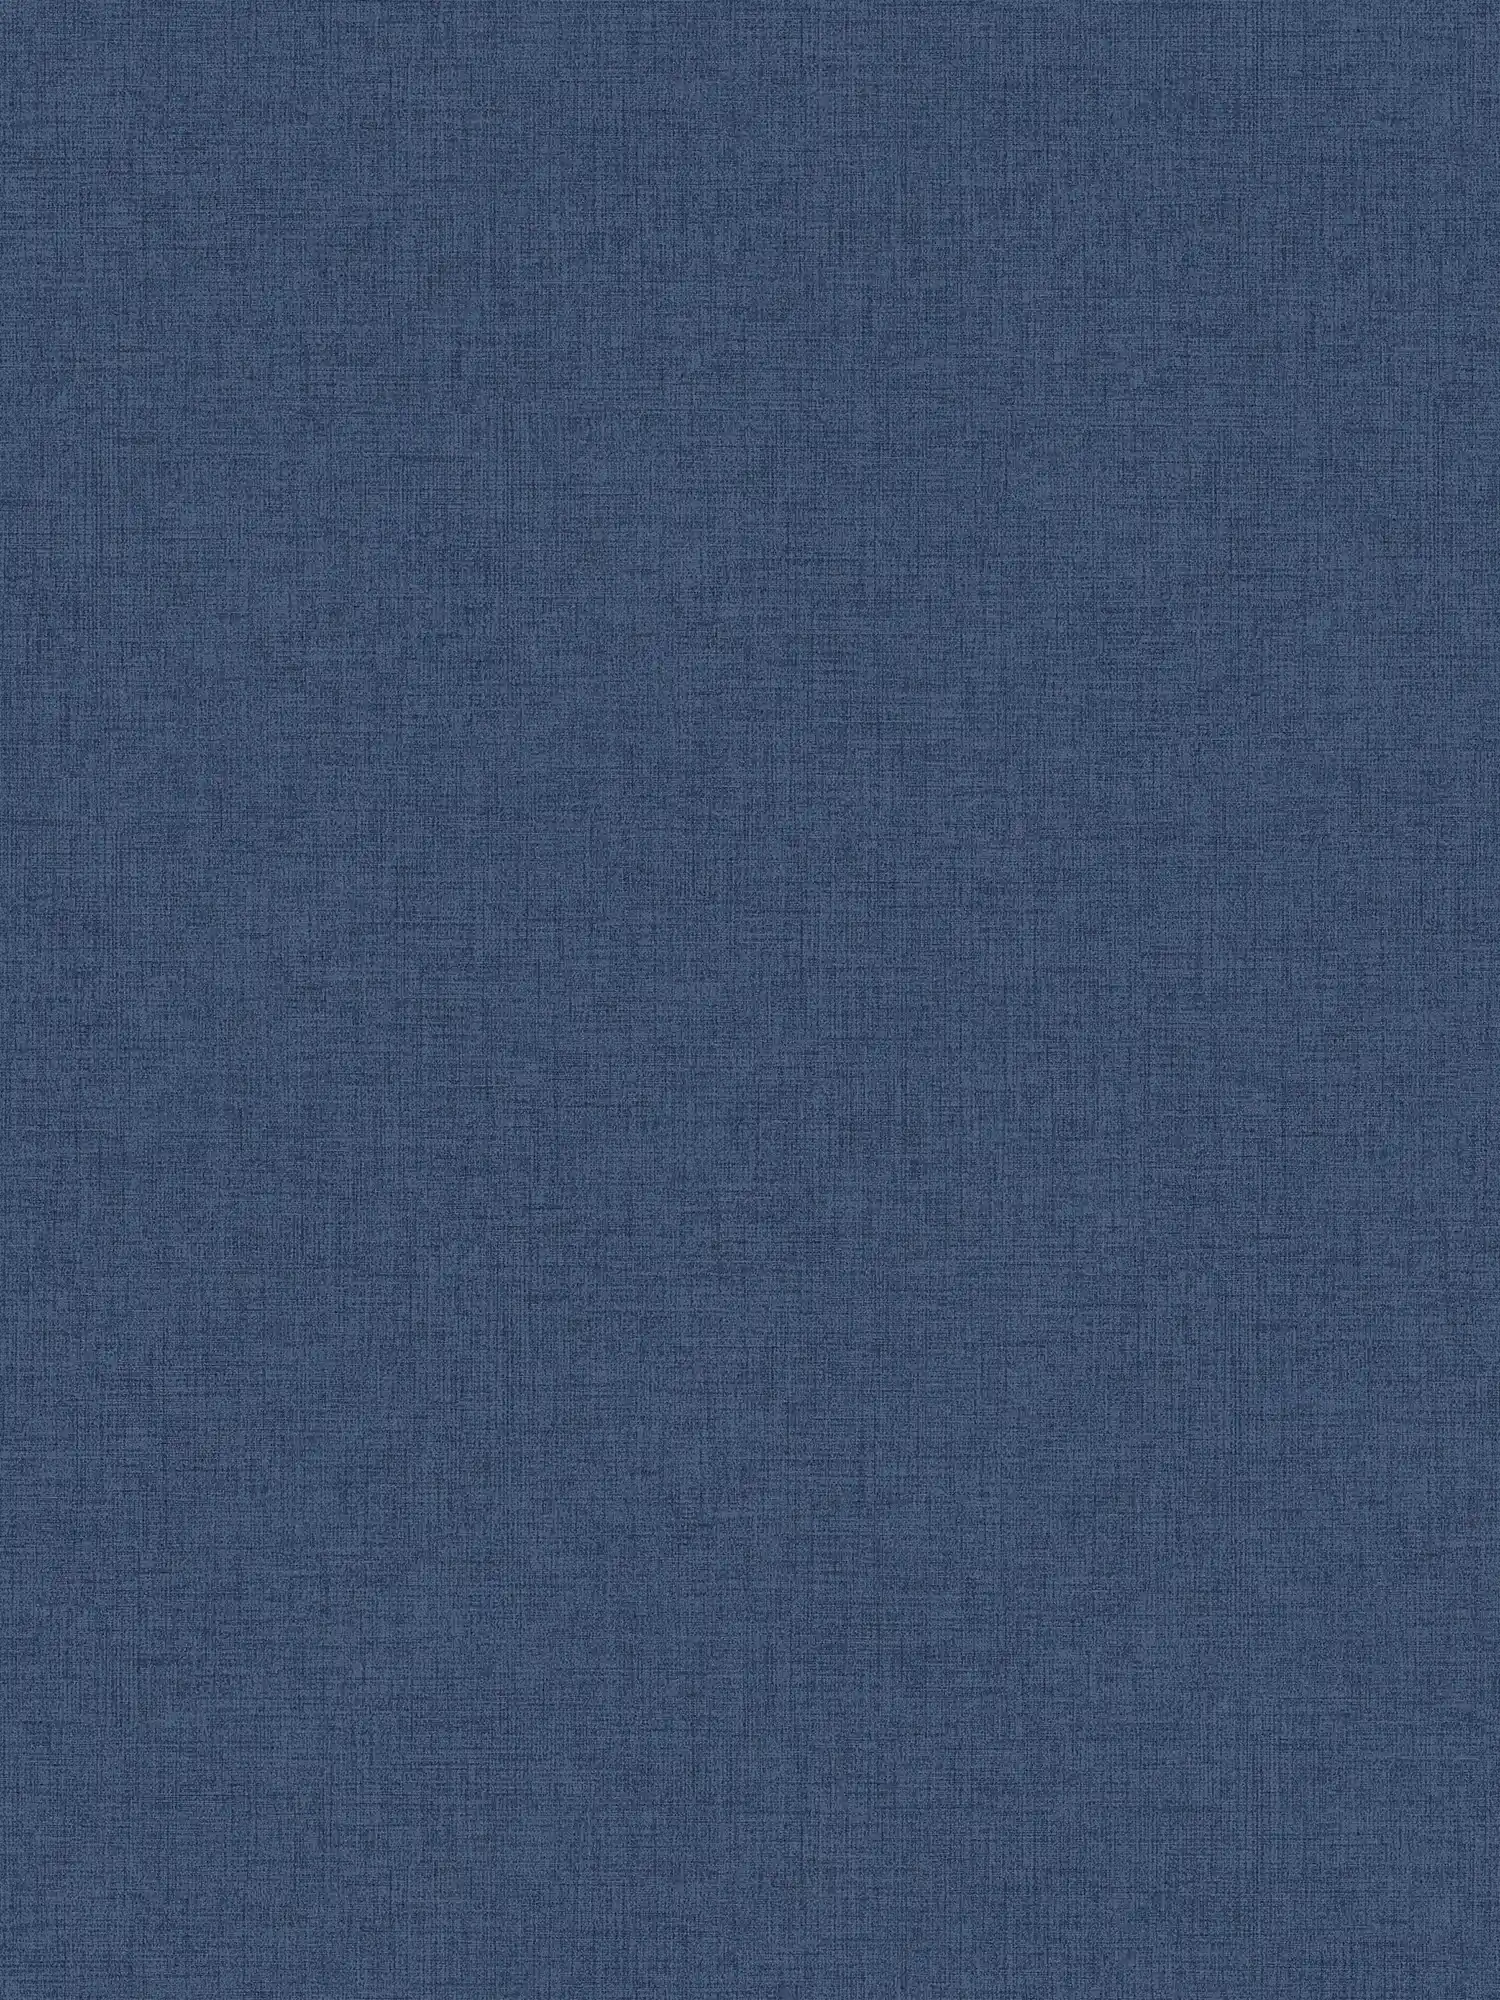 Navy blue wallpaper with linen look, Navy - Blue
